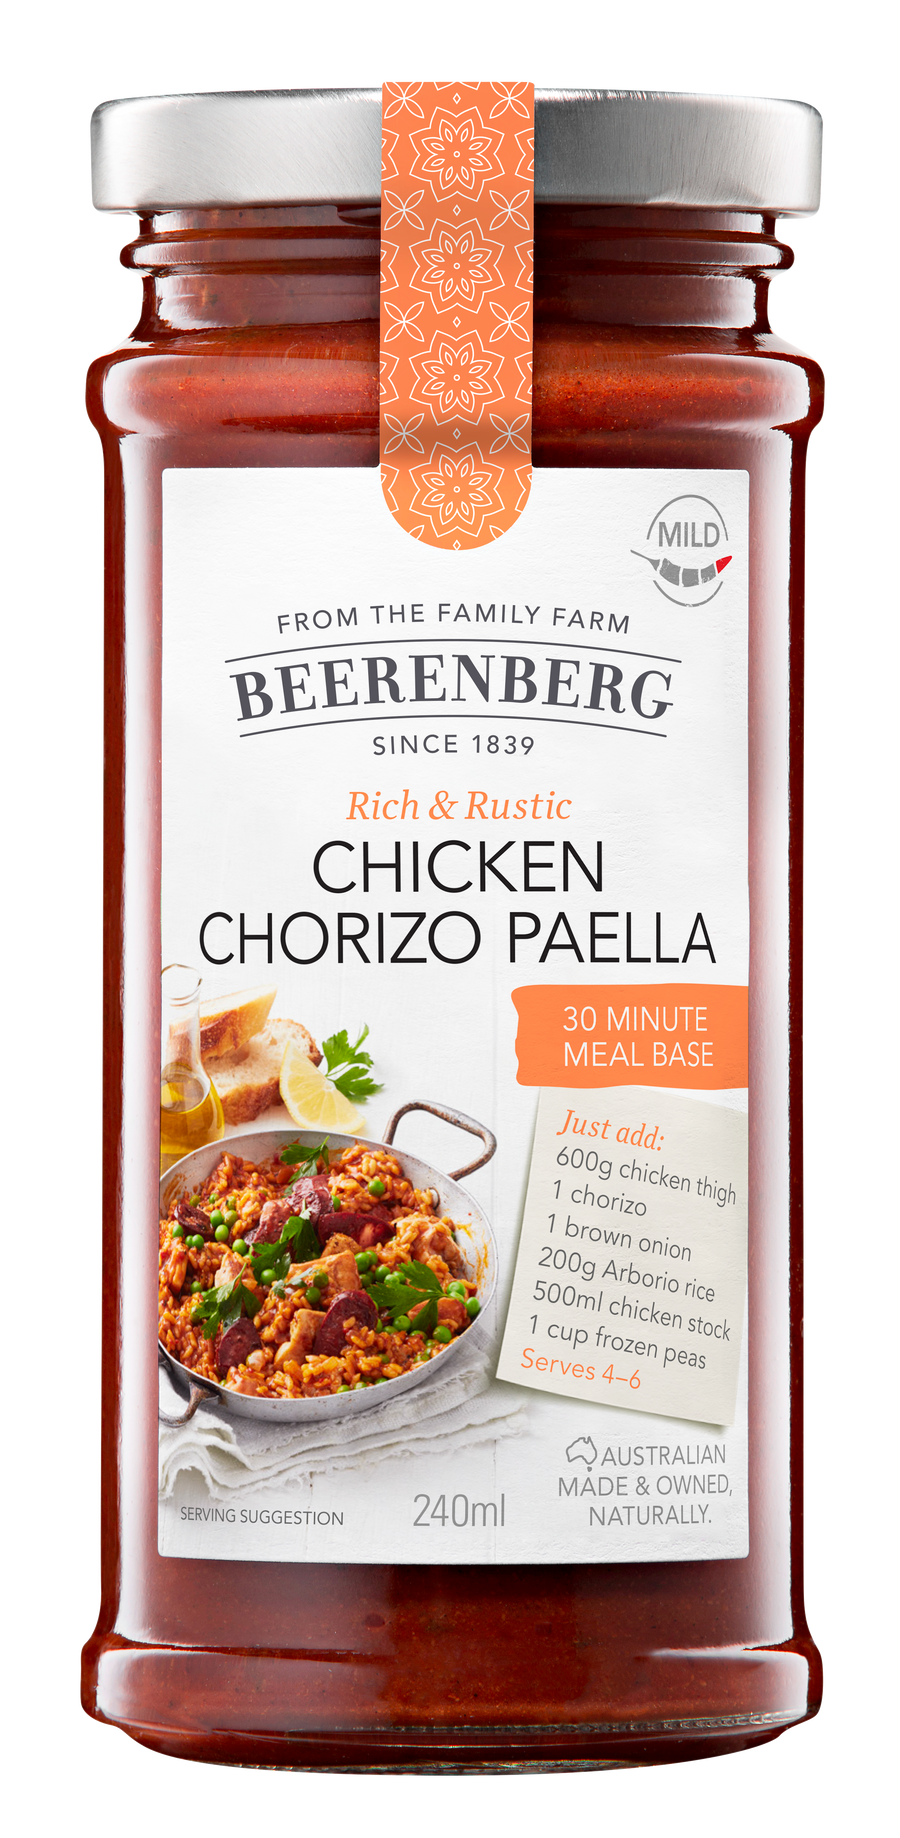 Chicken Chorizo Paella 30 Minute Meal Base